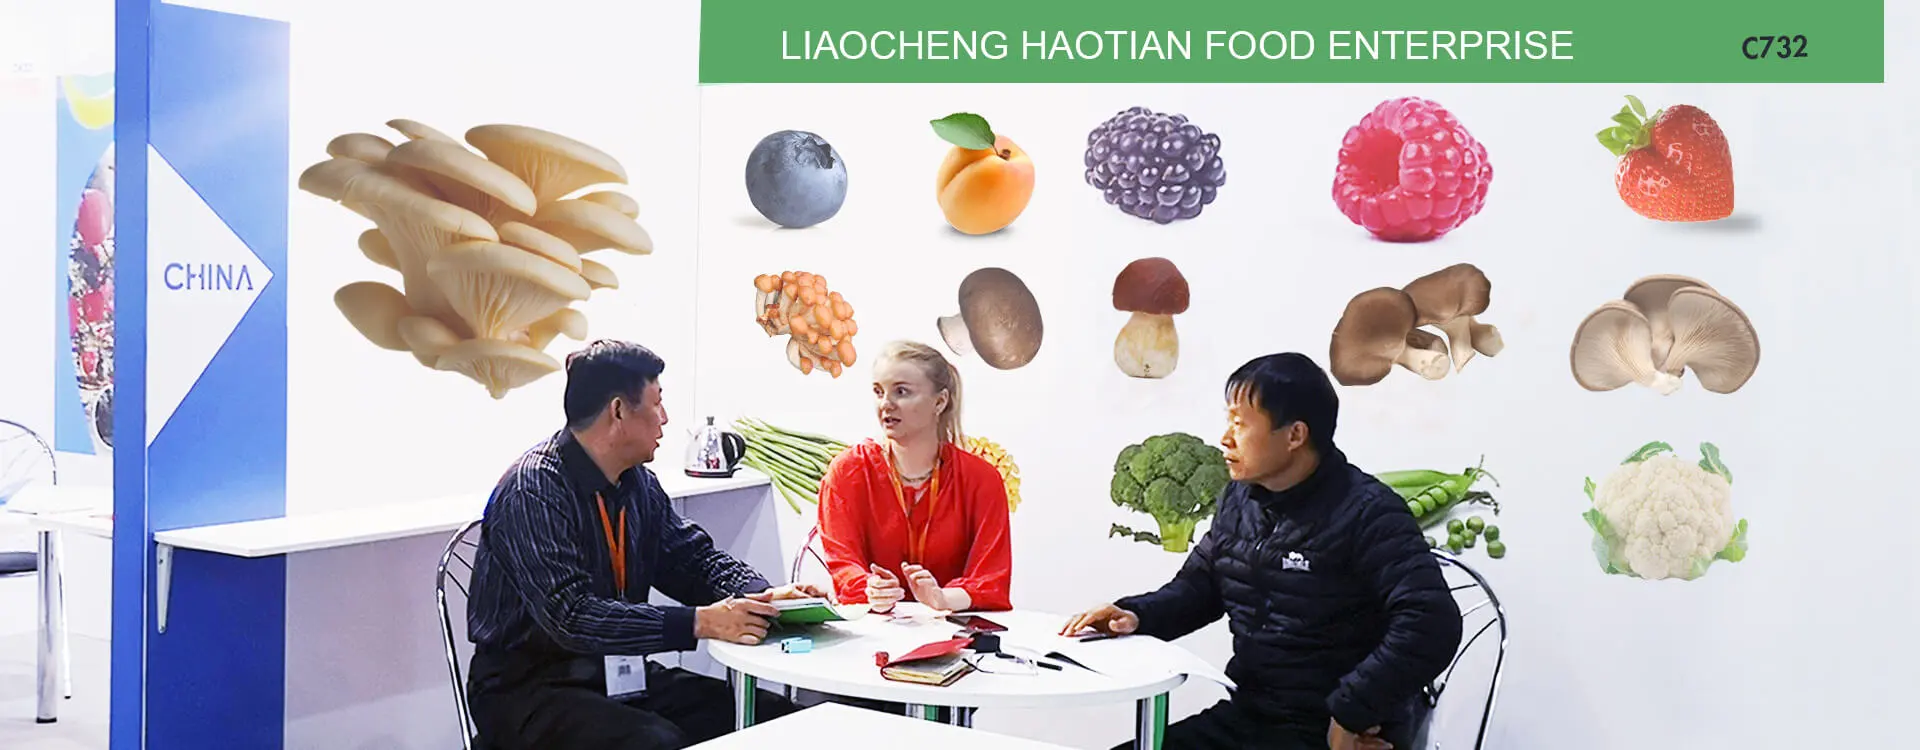 Empresa alimentaria Liaocheng Haotian